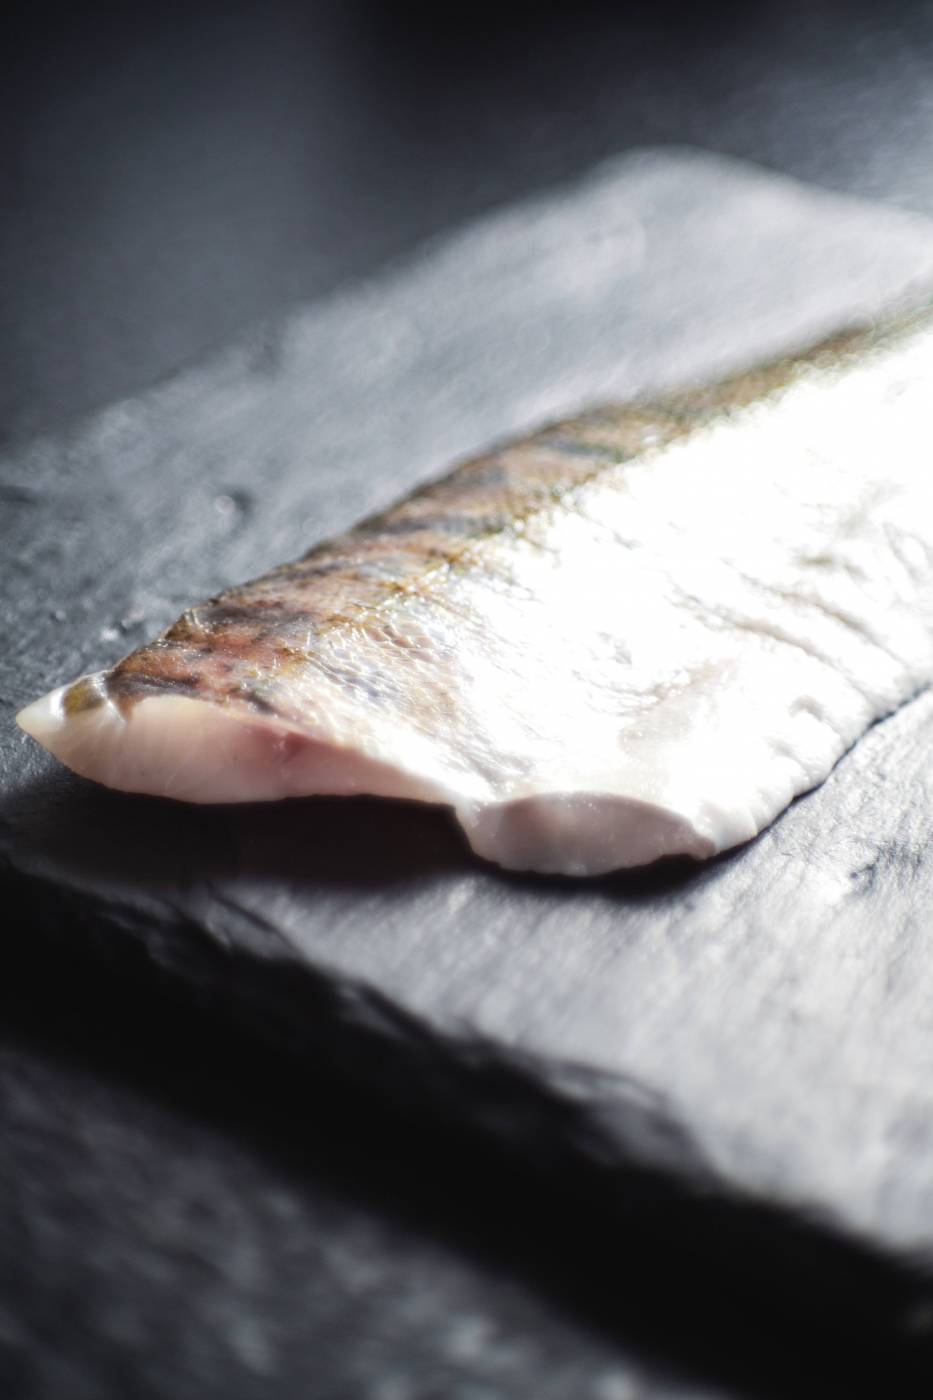 fresh salmon coalfish/ picture